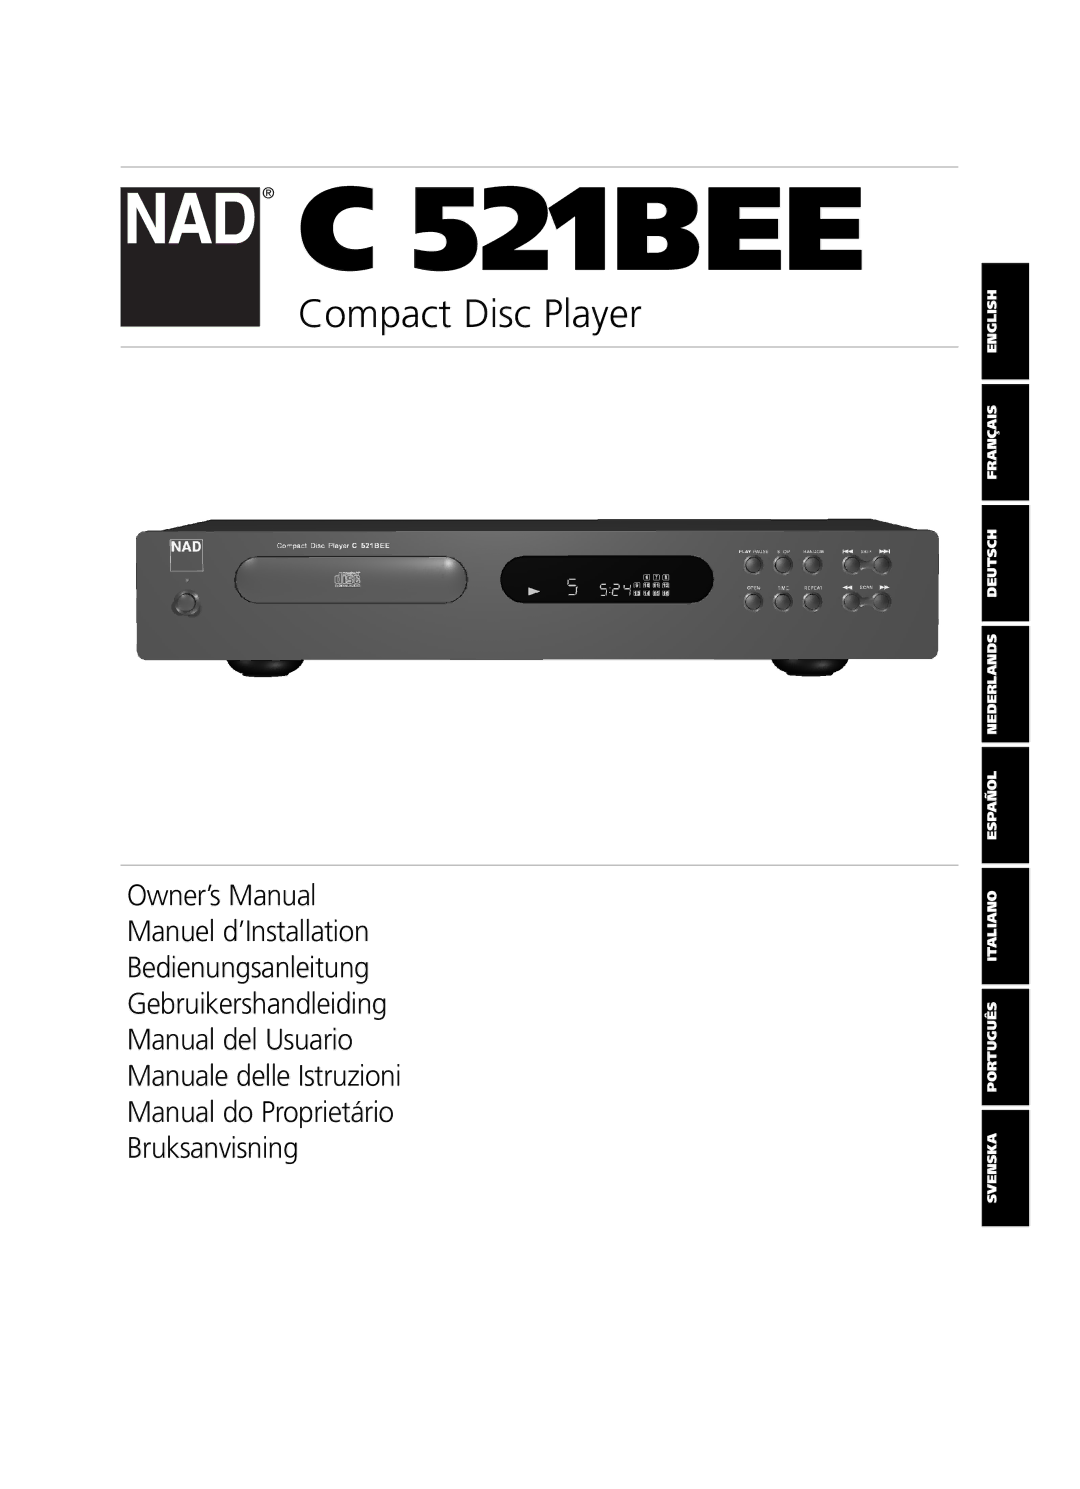 NAD C 521BEE owner manual 